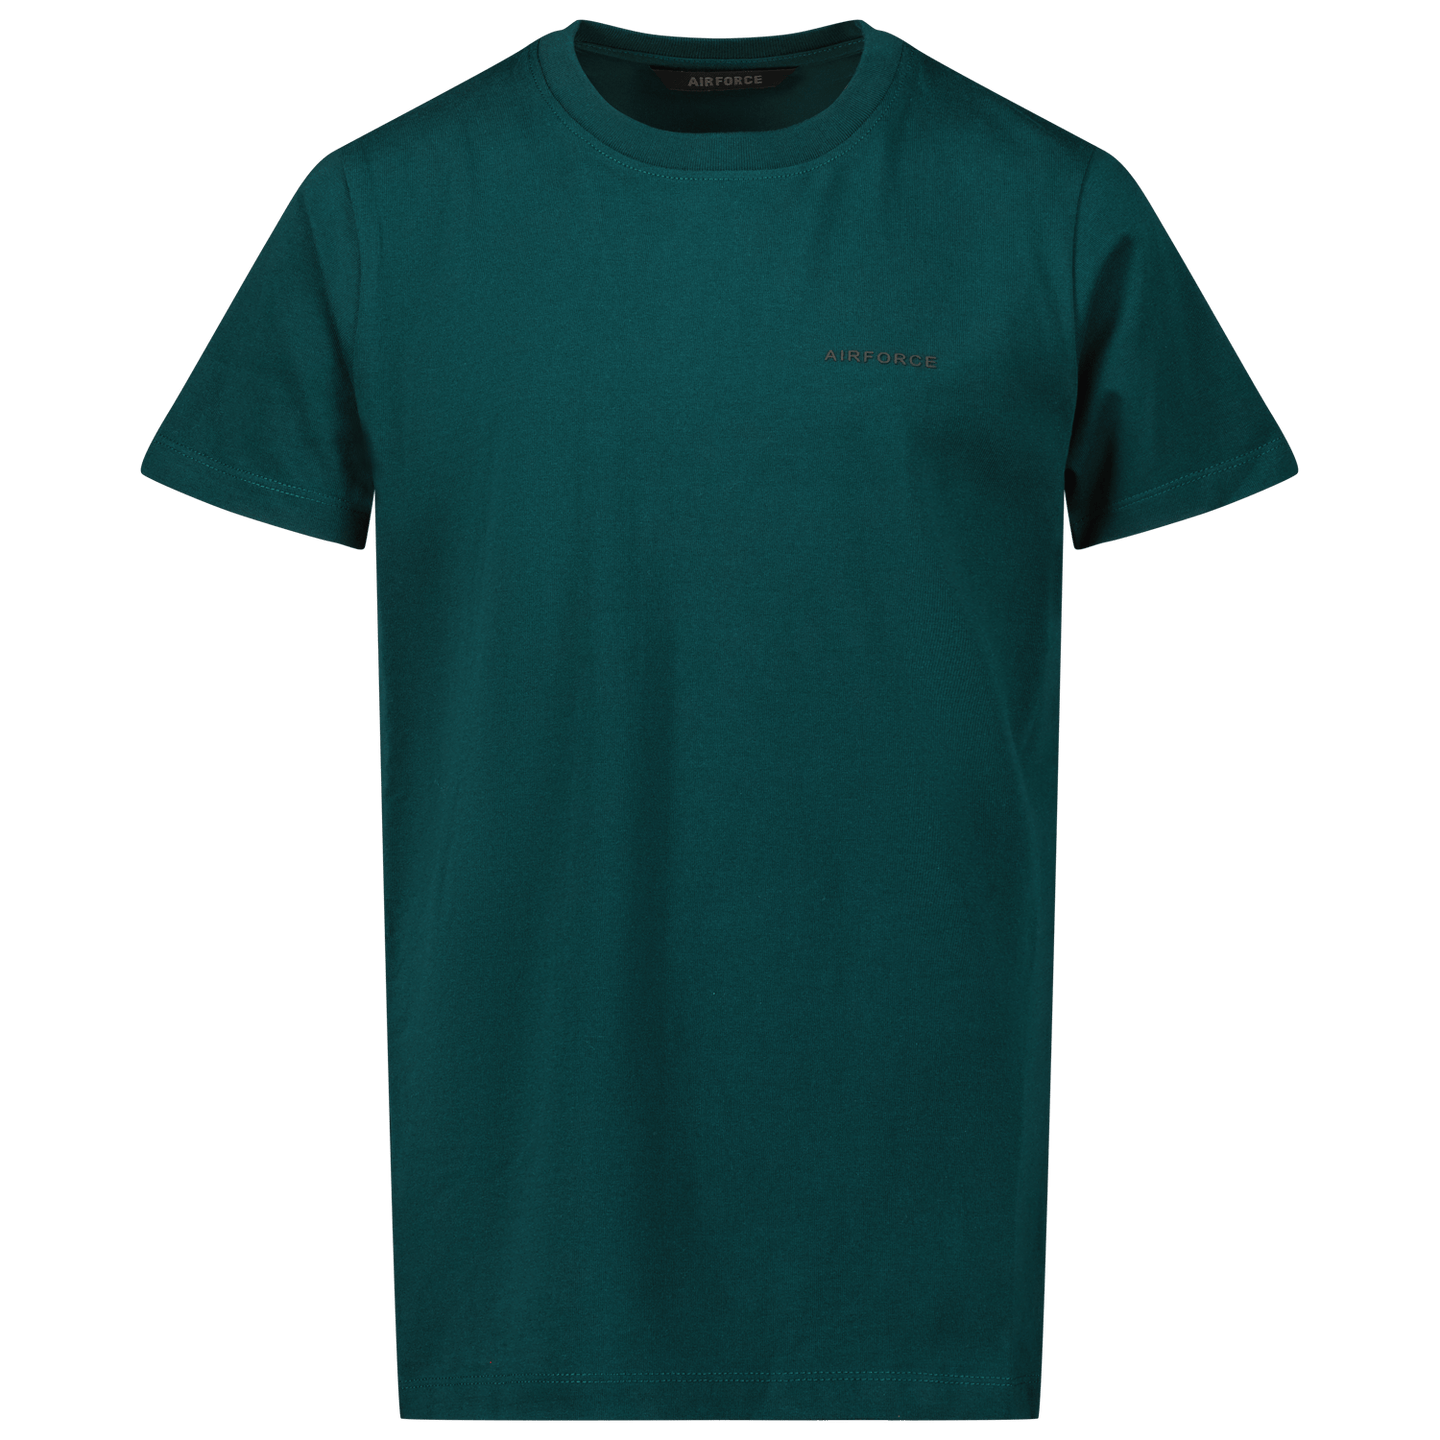 Airforce Kinder Jongens T-Shirt Donker Groen 4Y